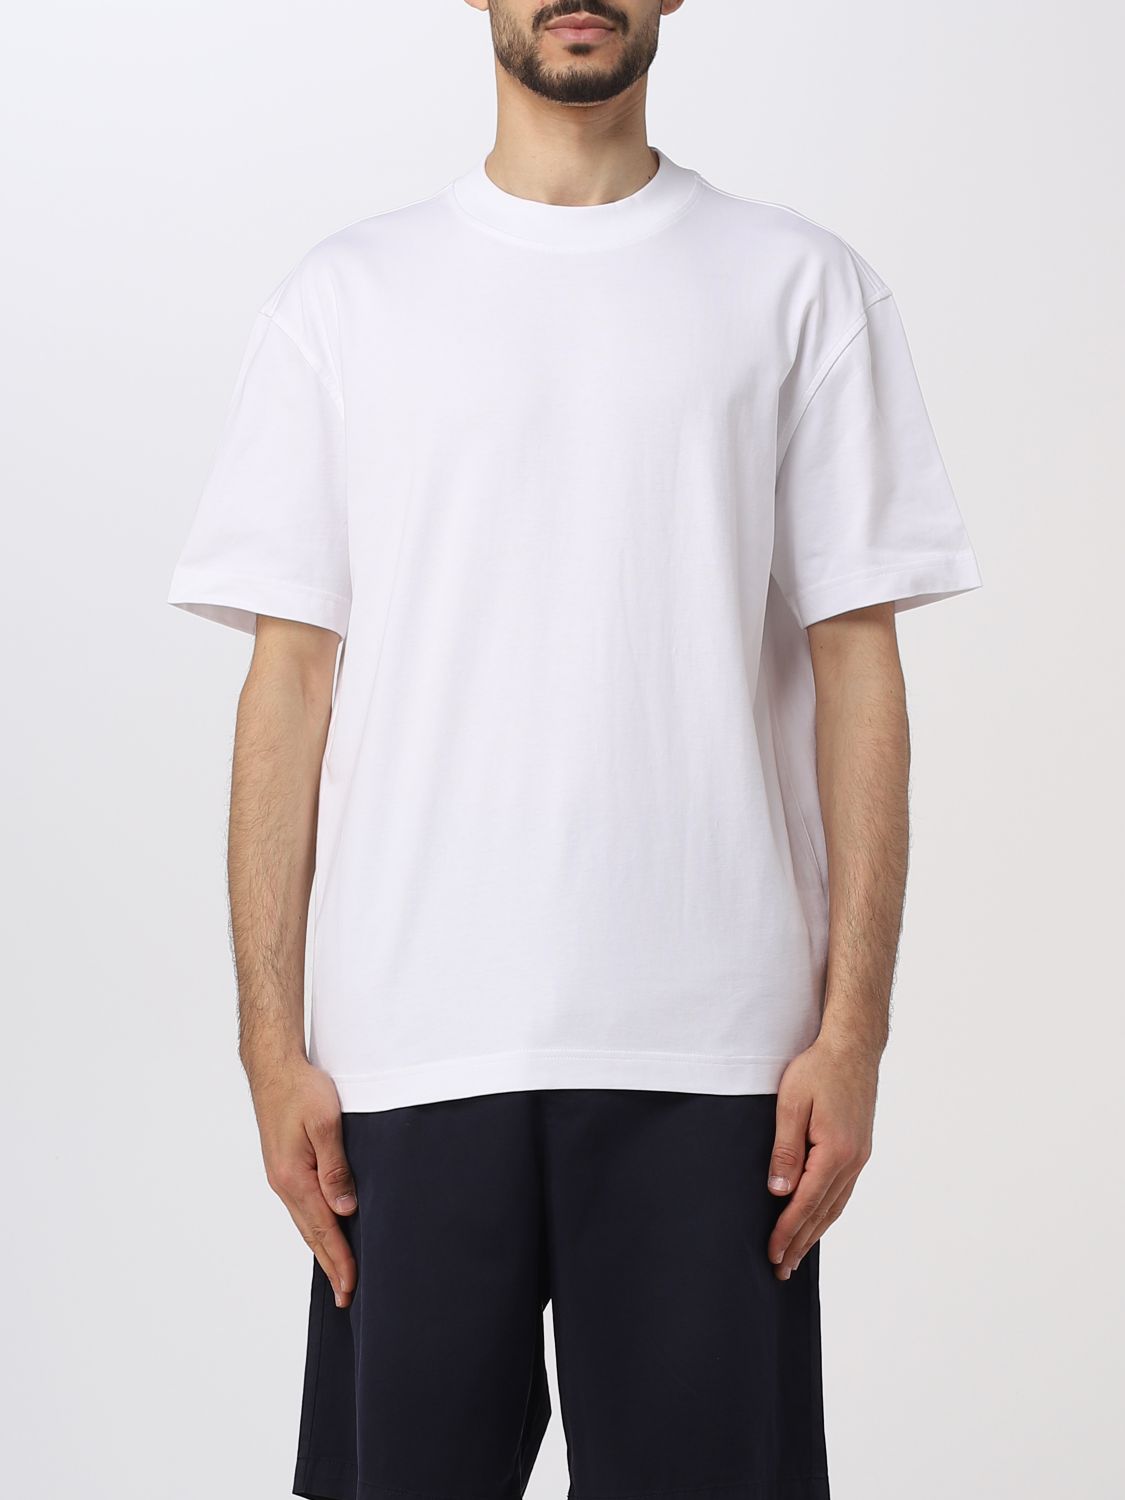 Hugo Boss T-shirt Farbe Weiss In White | ModeSens